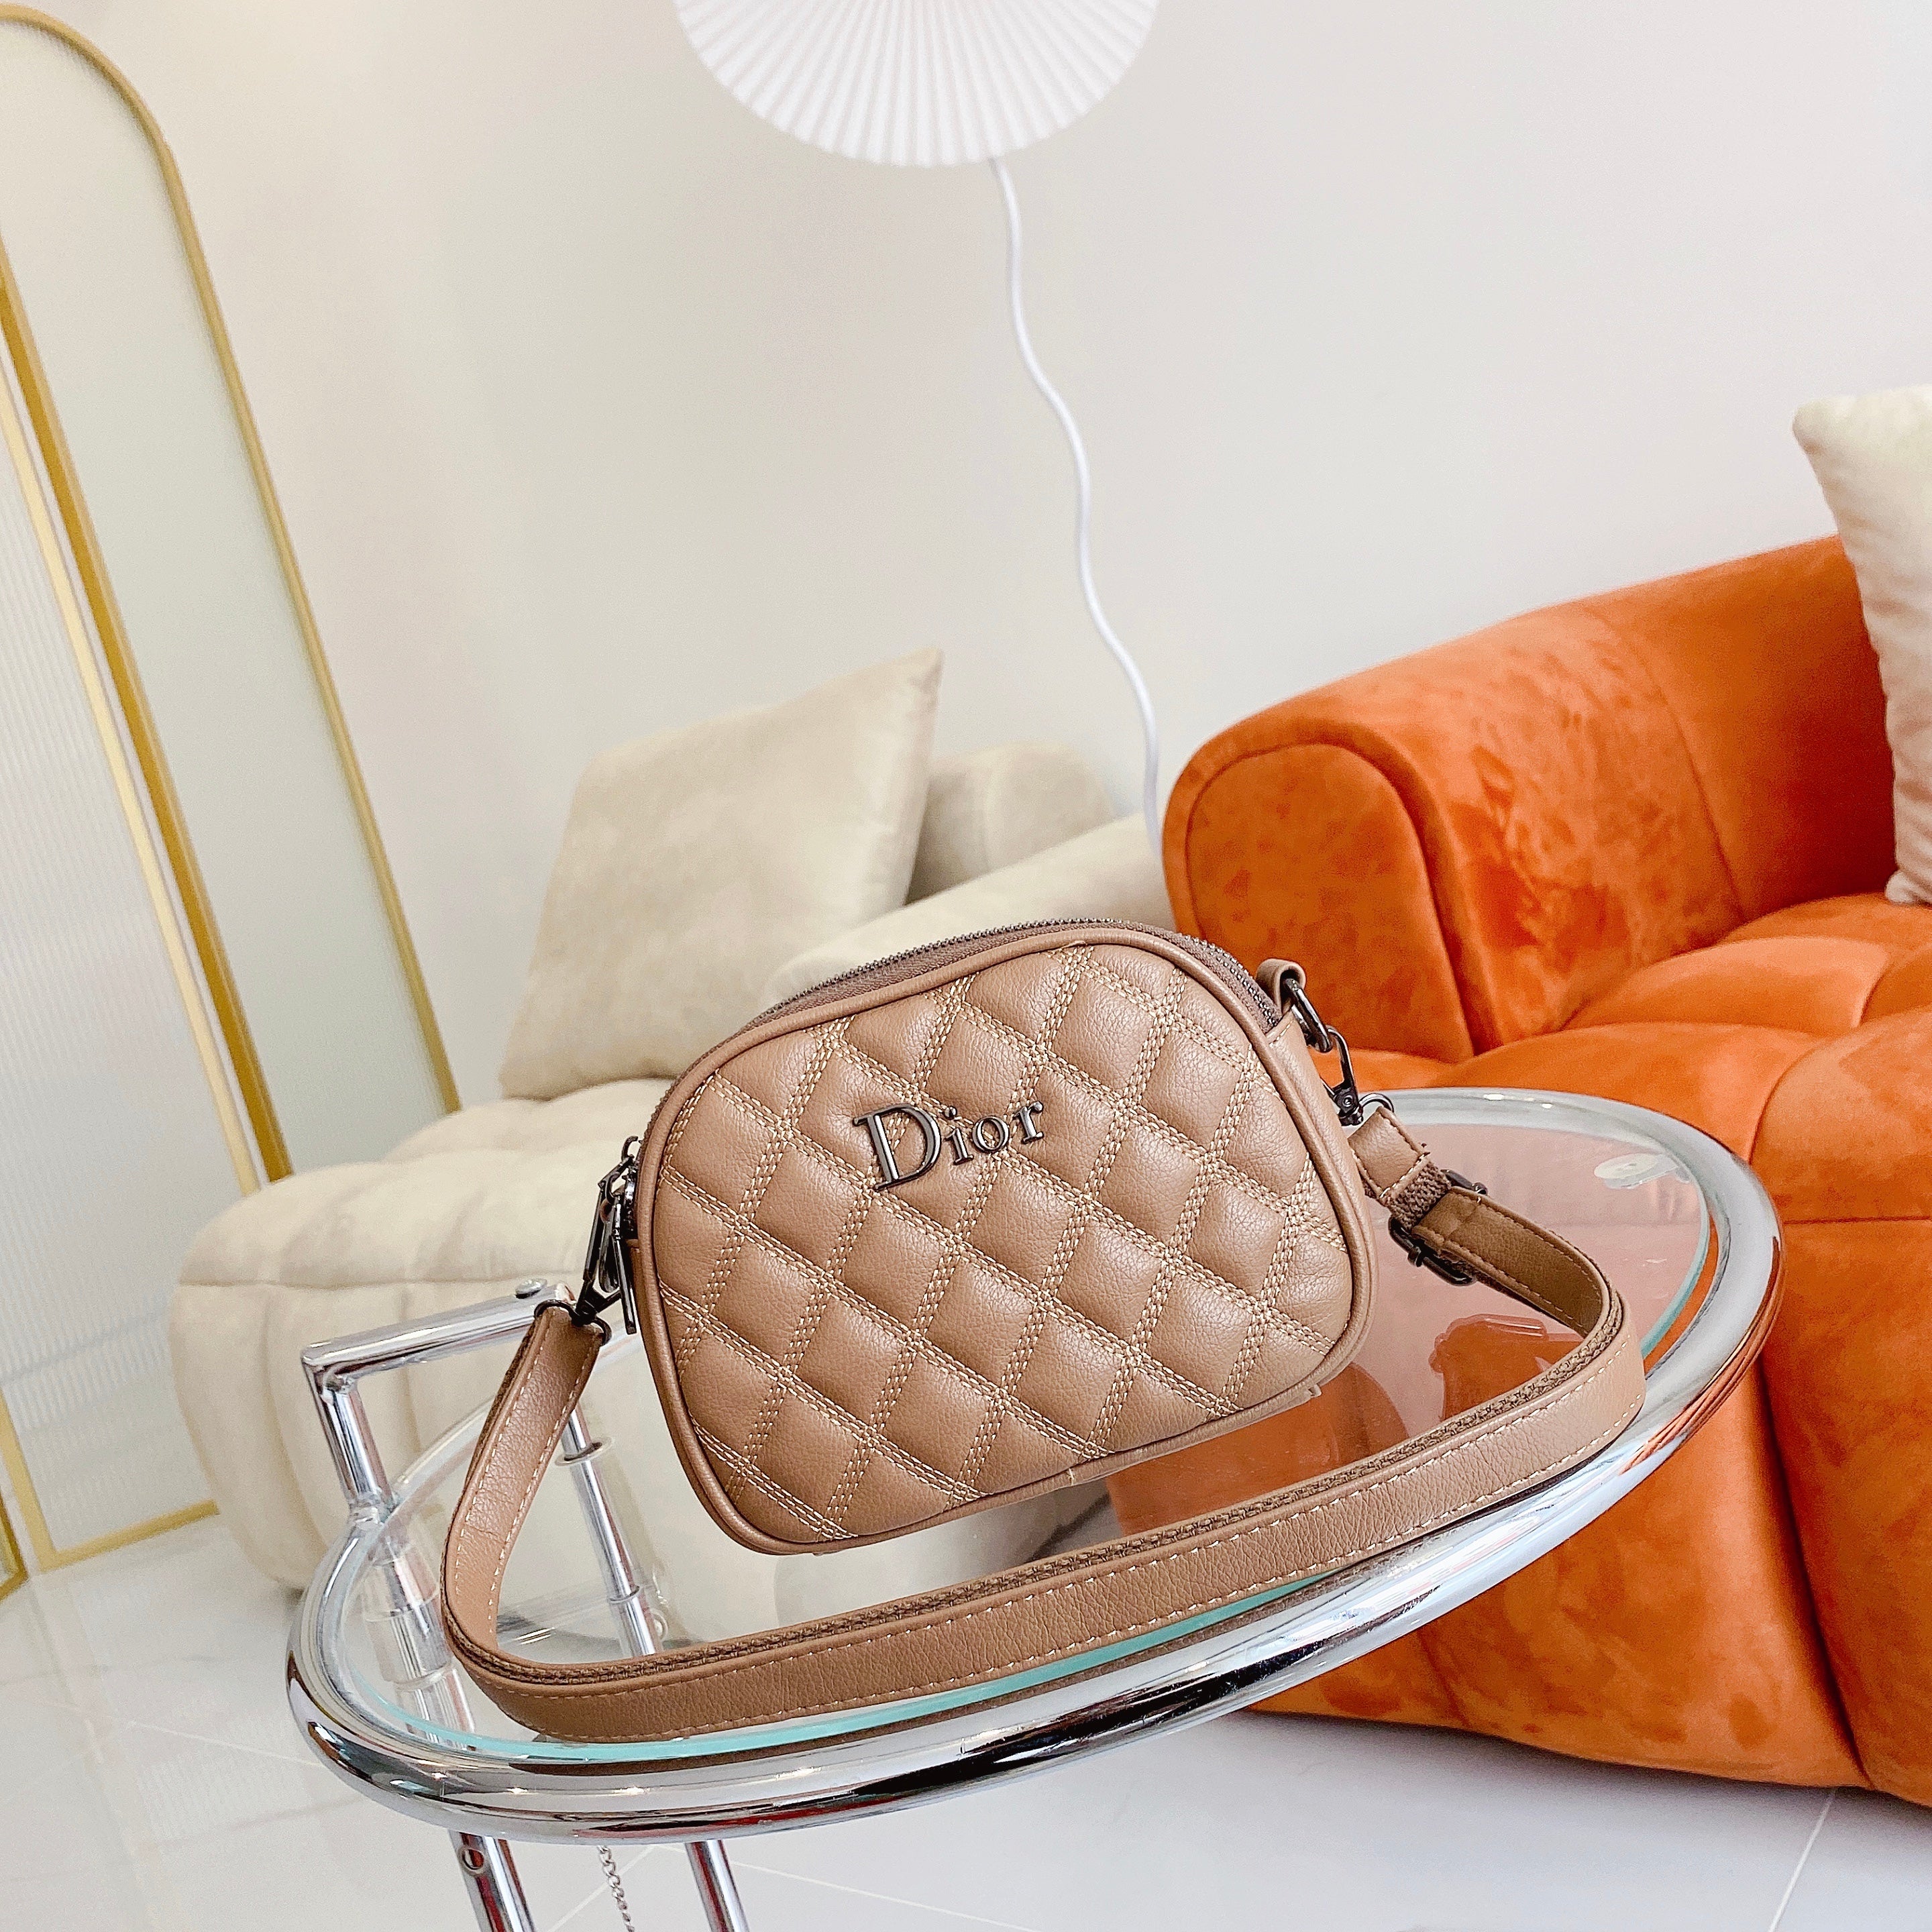 Dior New Classic Ladies Fashion Leather Satchel Crossbody Shoulder Bag Handbag Messenger Bag